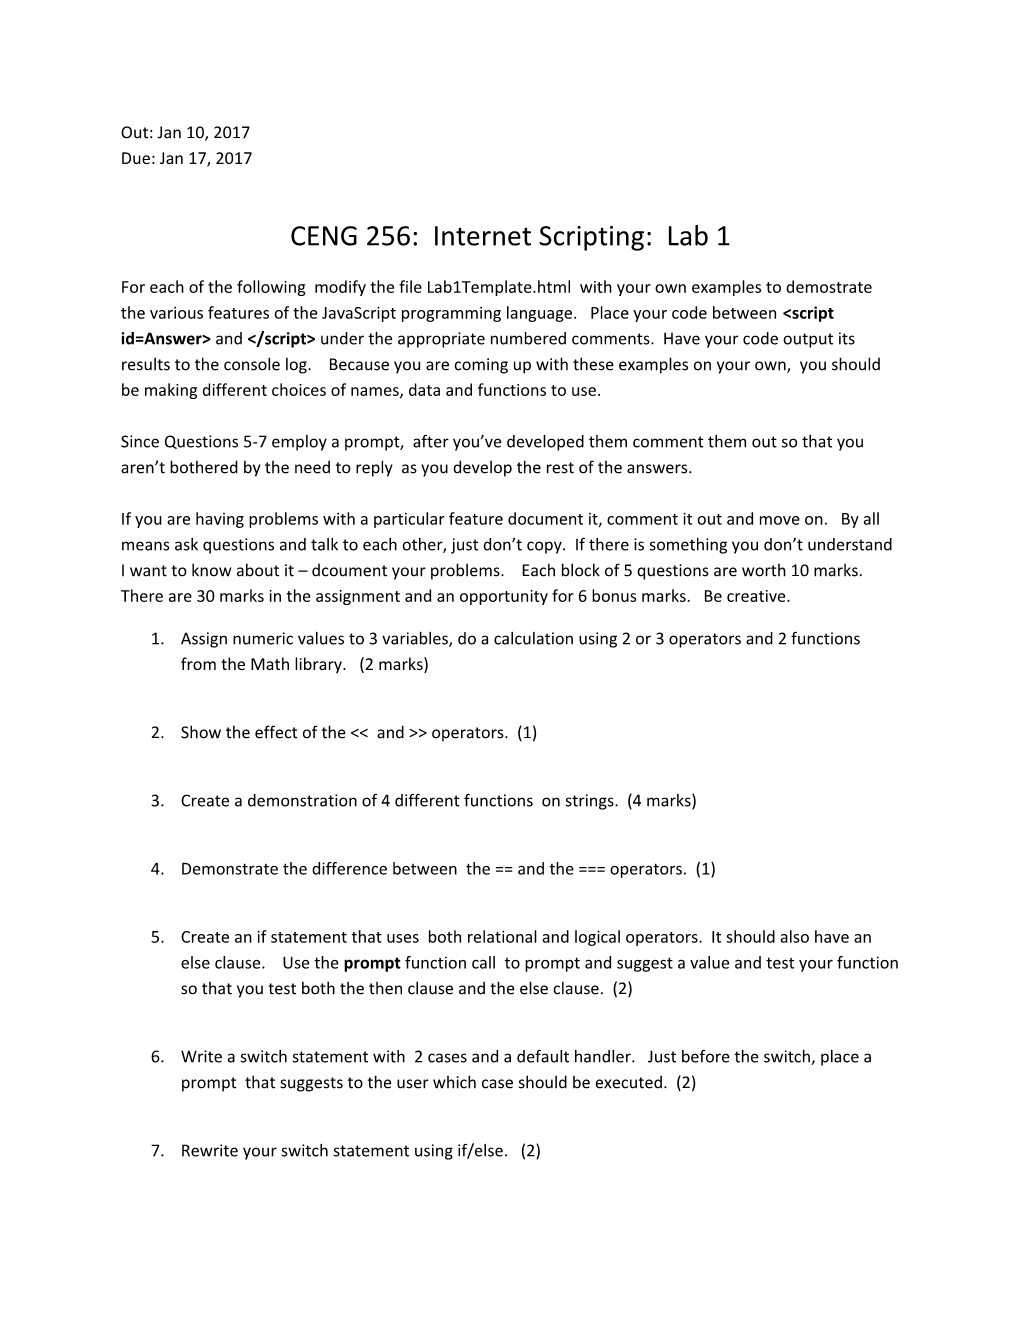 CENG 256: Internet Scripting: Lab 1